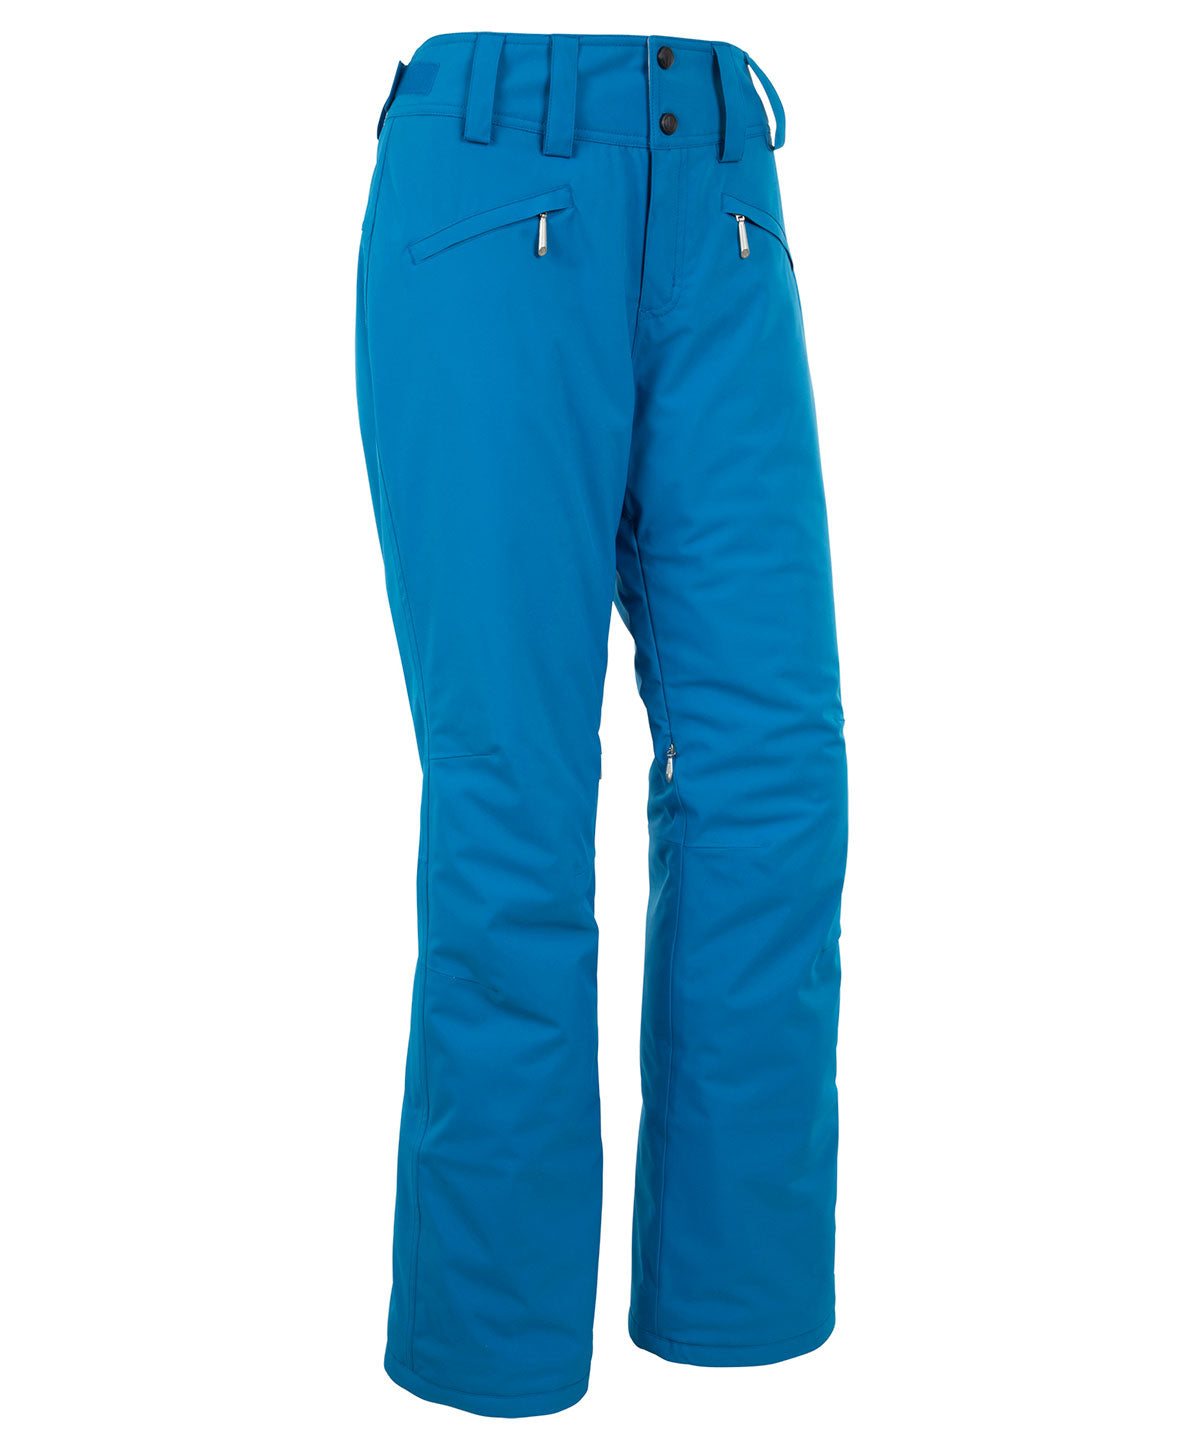 Sunisery Women'S Sport Pants Elastic Cord Stretch High Waist Trousers